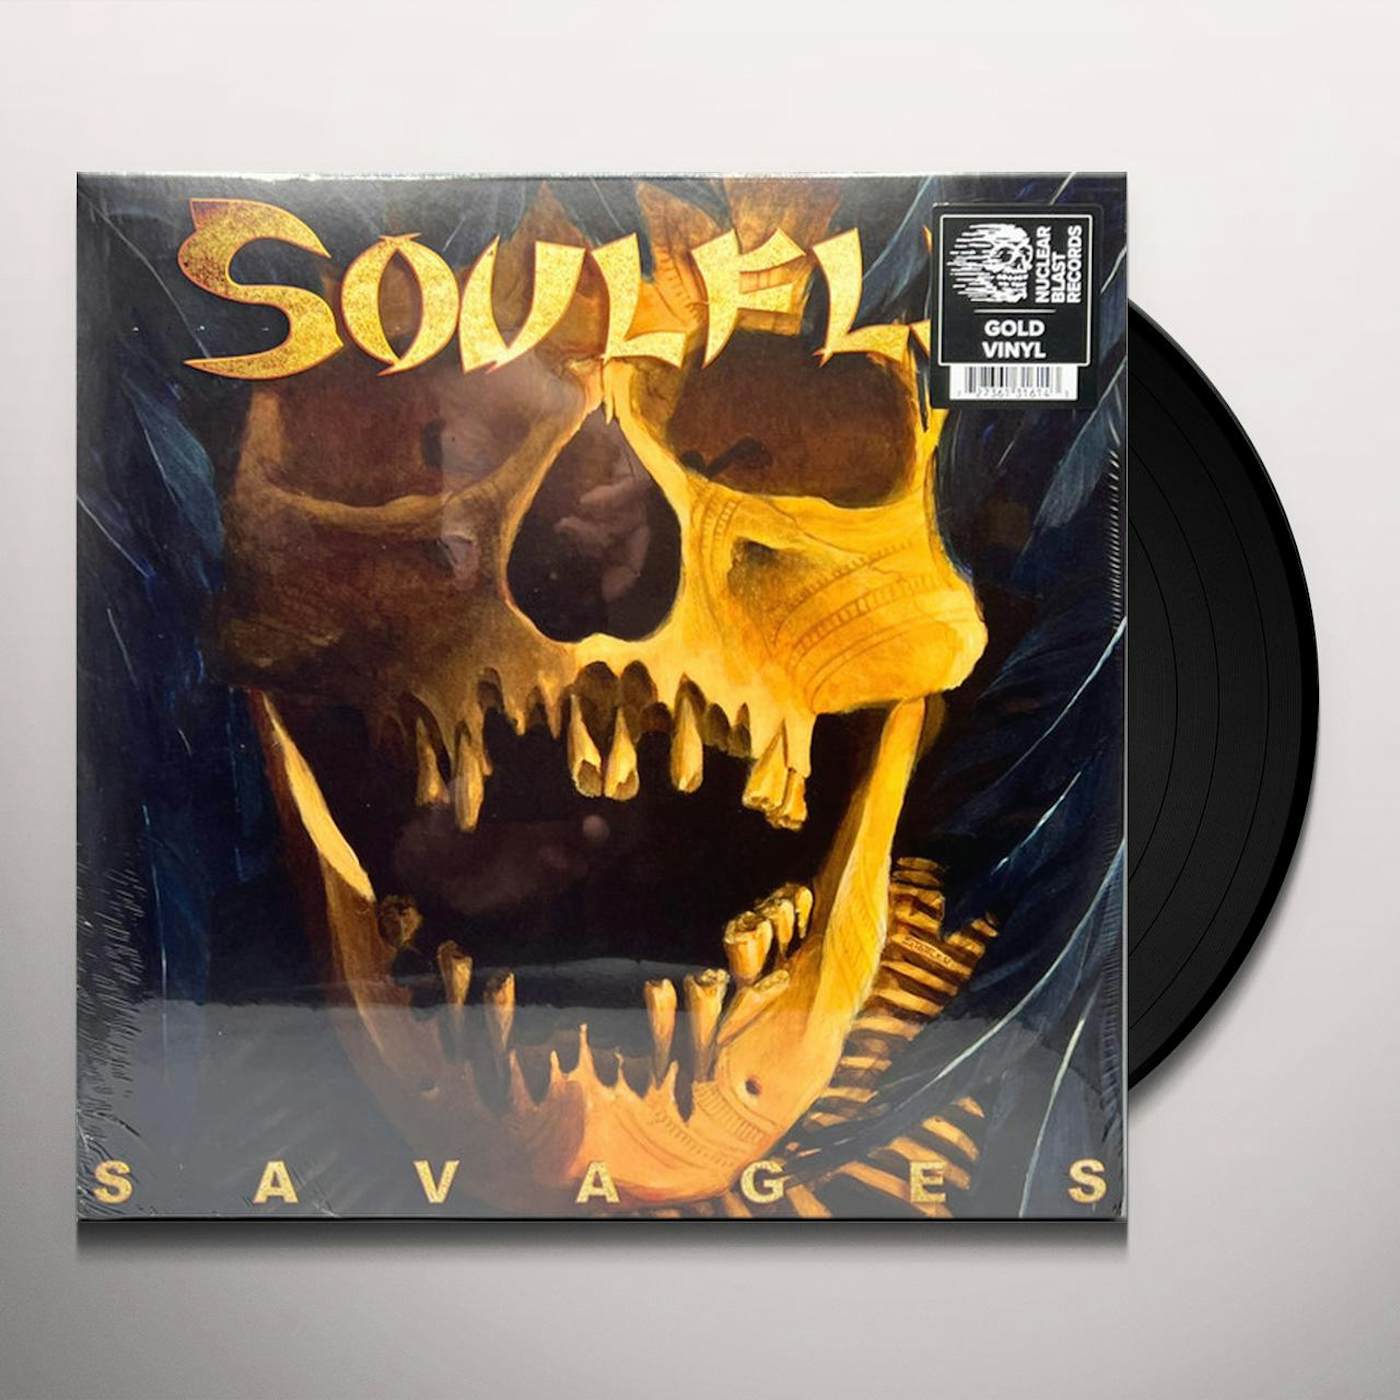 Soulfly SAVAGES (GOLD VINYL/2LP) Vinyl Record